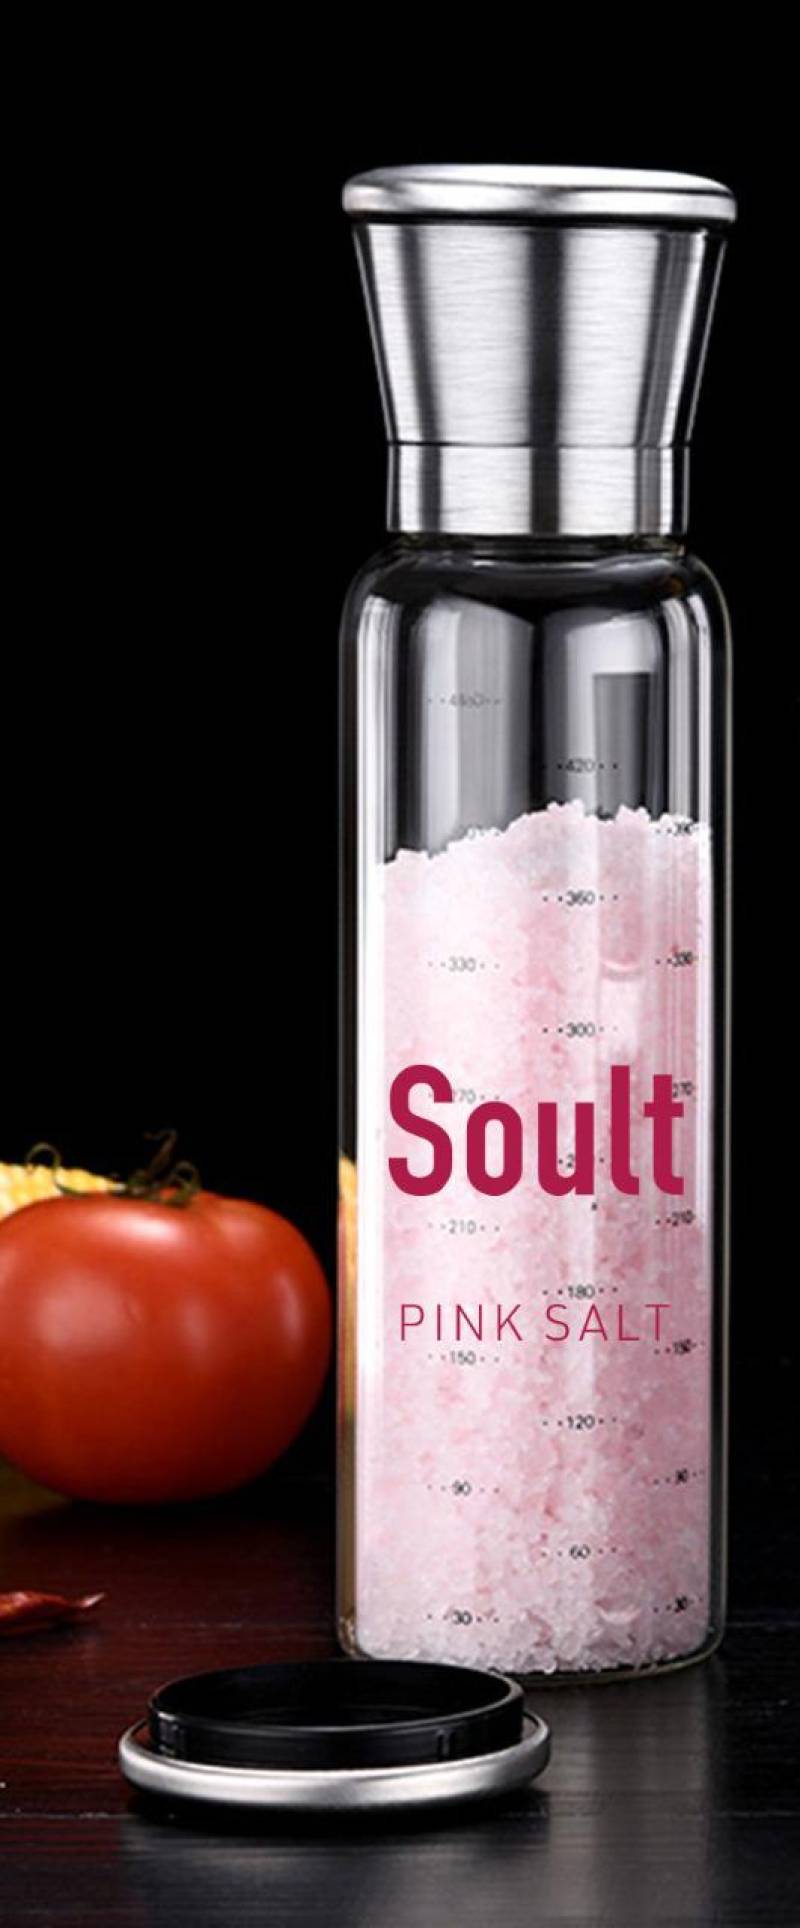 Soult: Bringing Premium Pink Himalayan Salt Back to Pakistan!